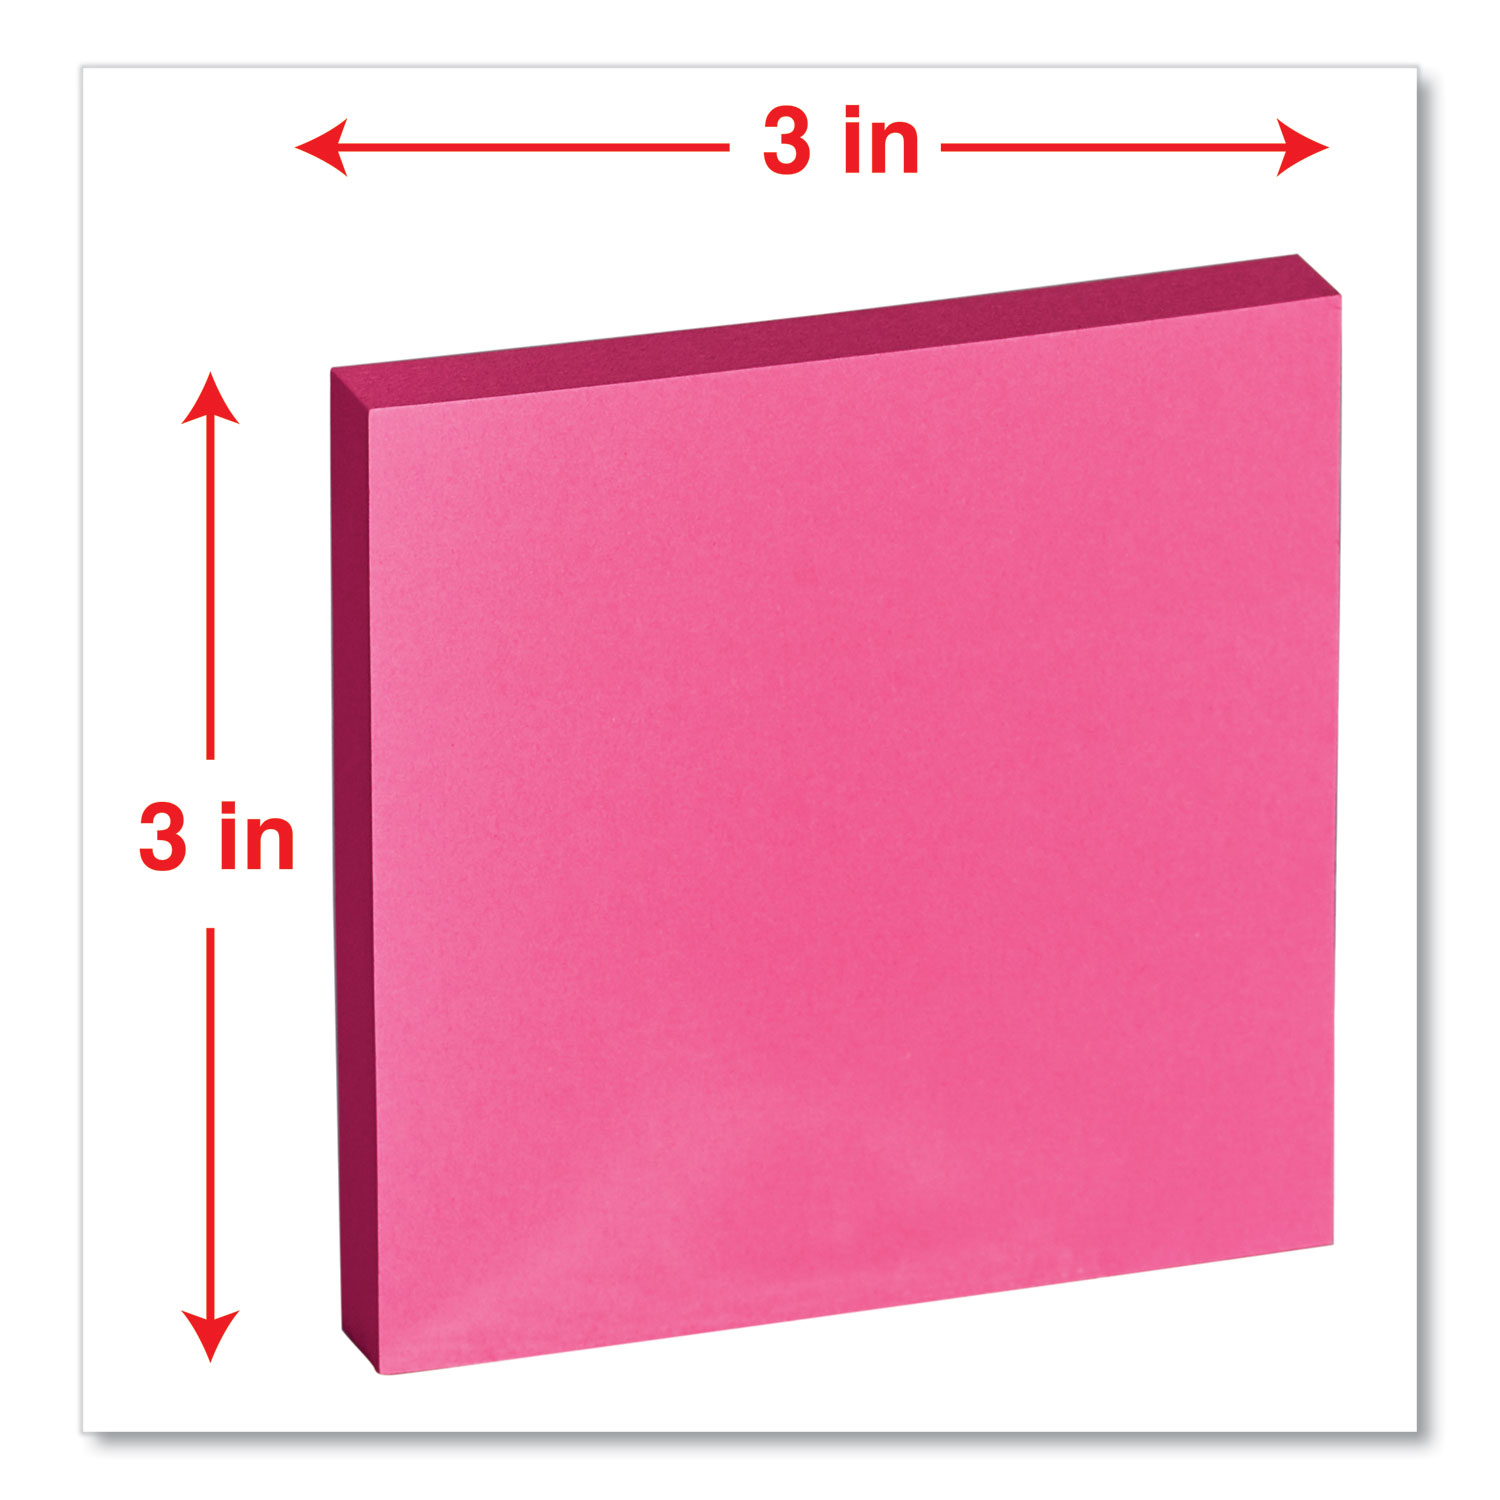 Self-Stick Note Pads by Universal® UNV35673